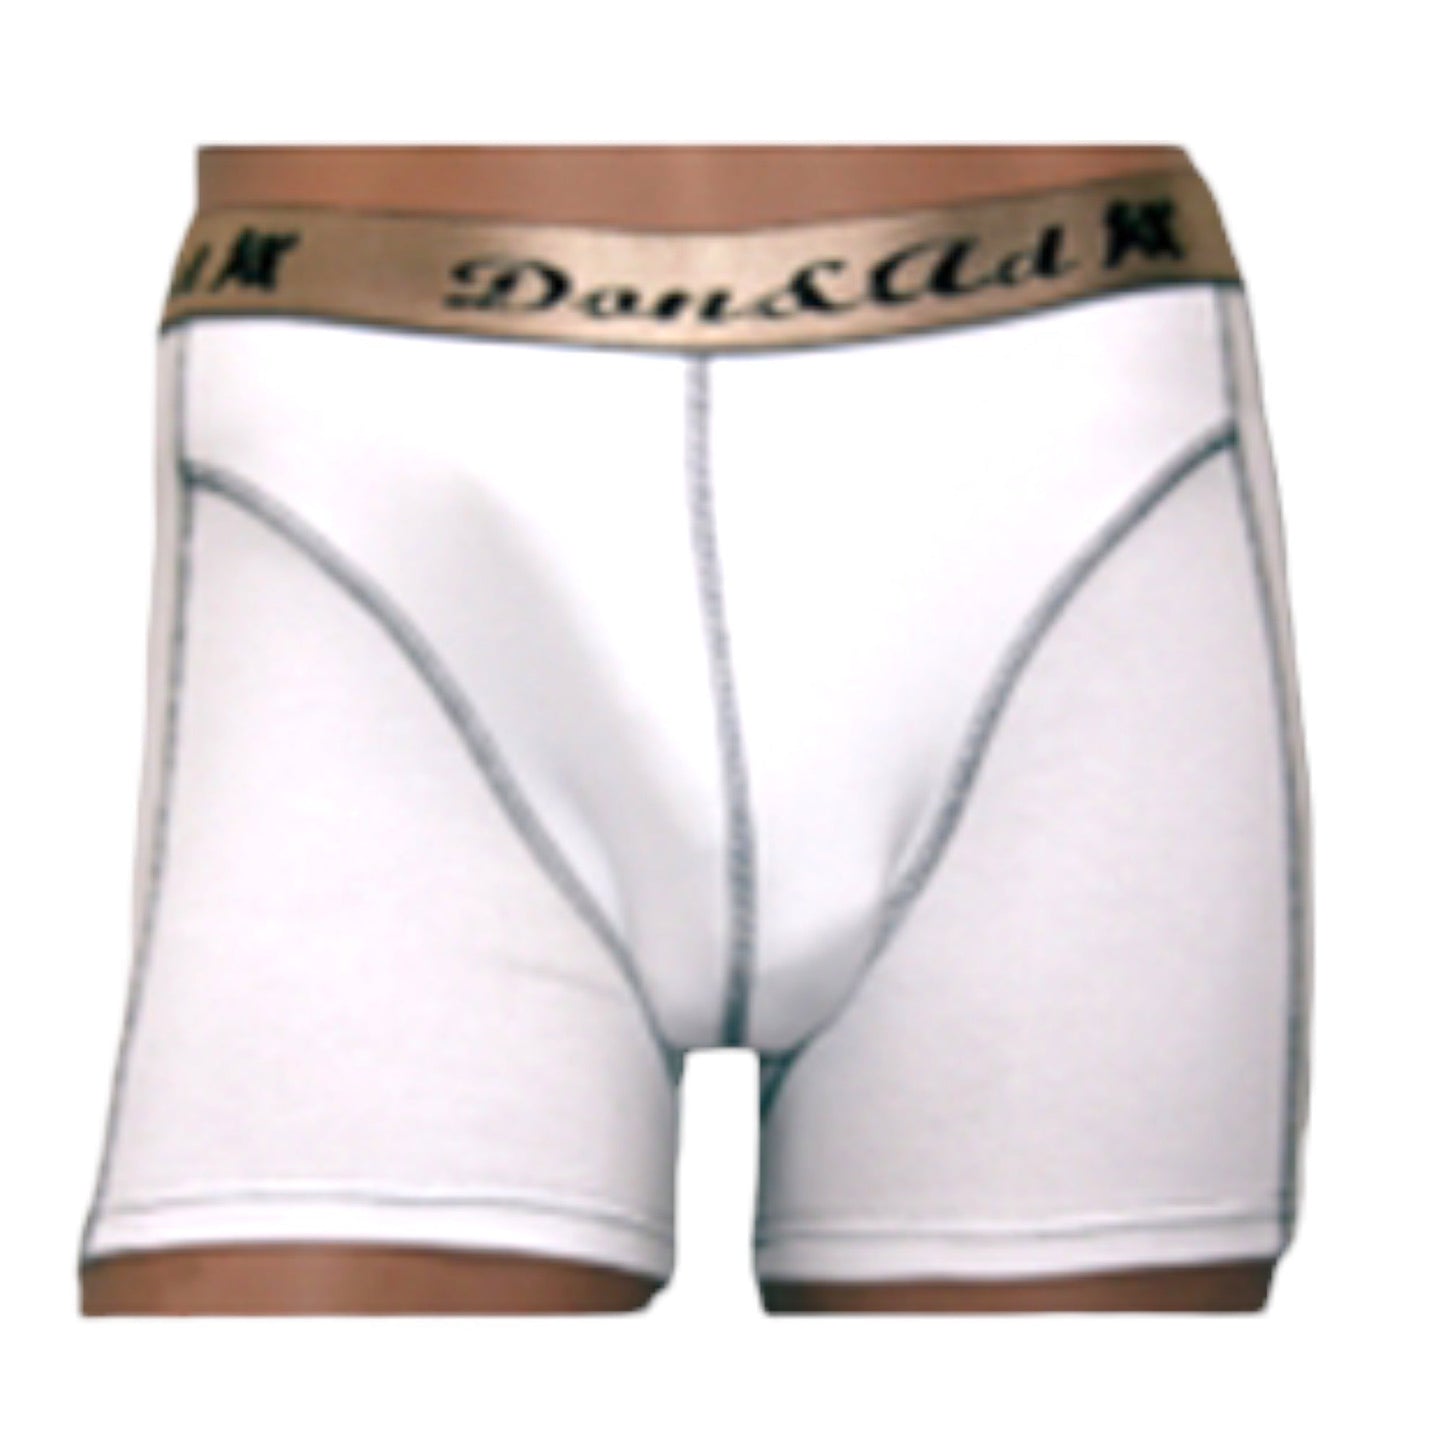 Kinky Pleasure - Don & Ad Underwear - 5 Colours - 4 Sizes - 1 Piece